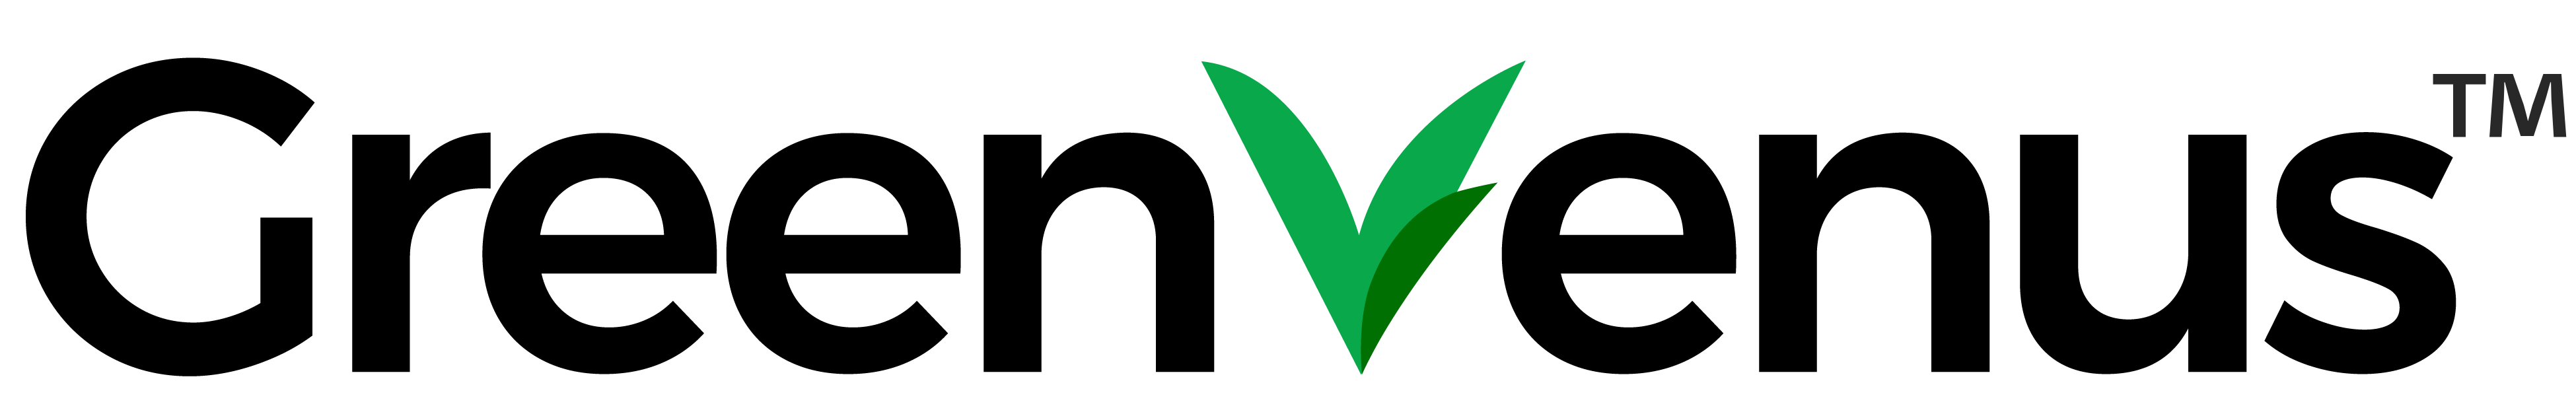 http://www.greenvenus.com/wp-content/uploads/2021/08/cropped-logo_GreenVenusTM.png